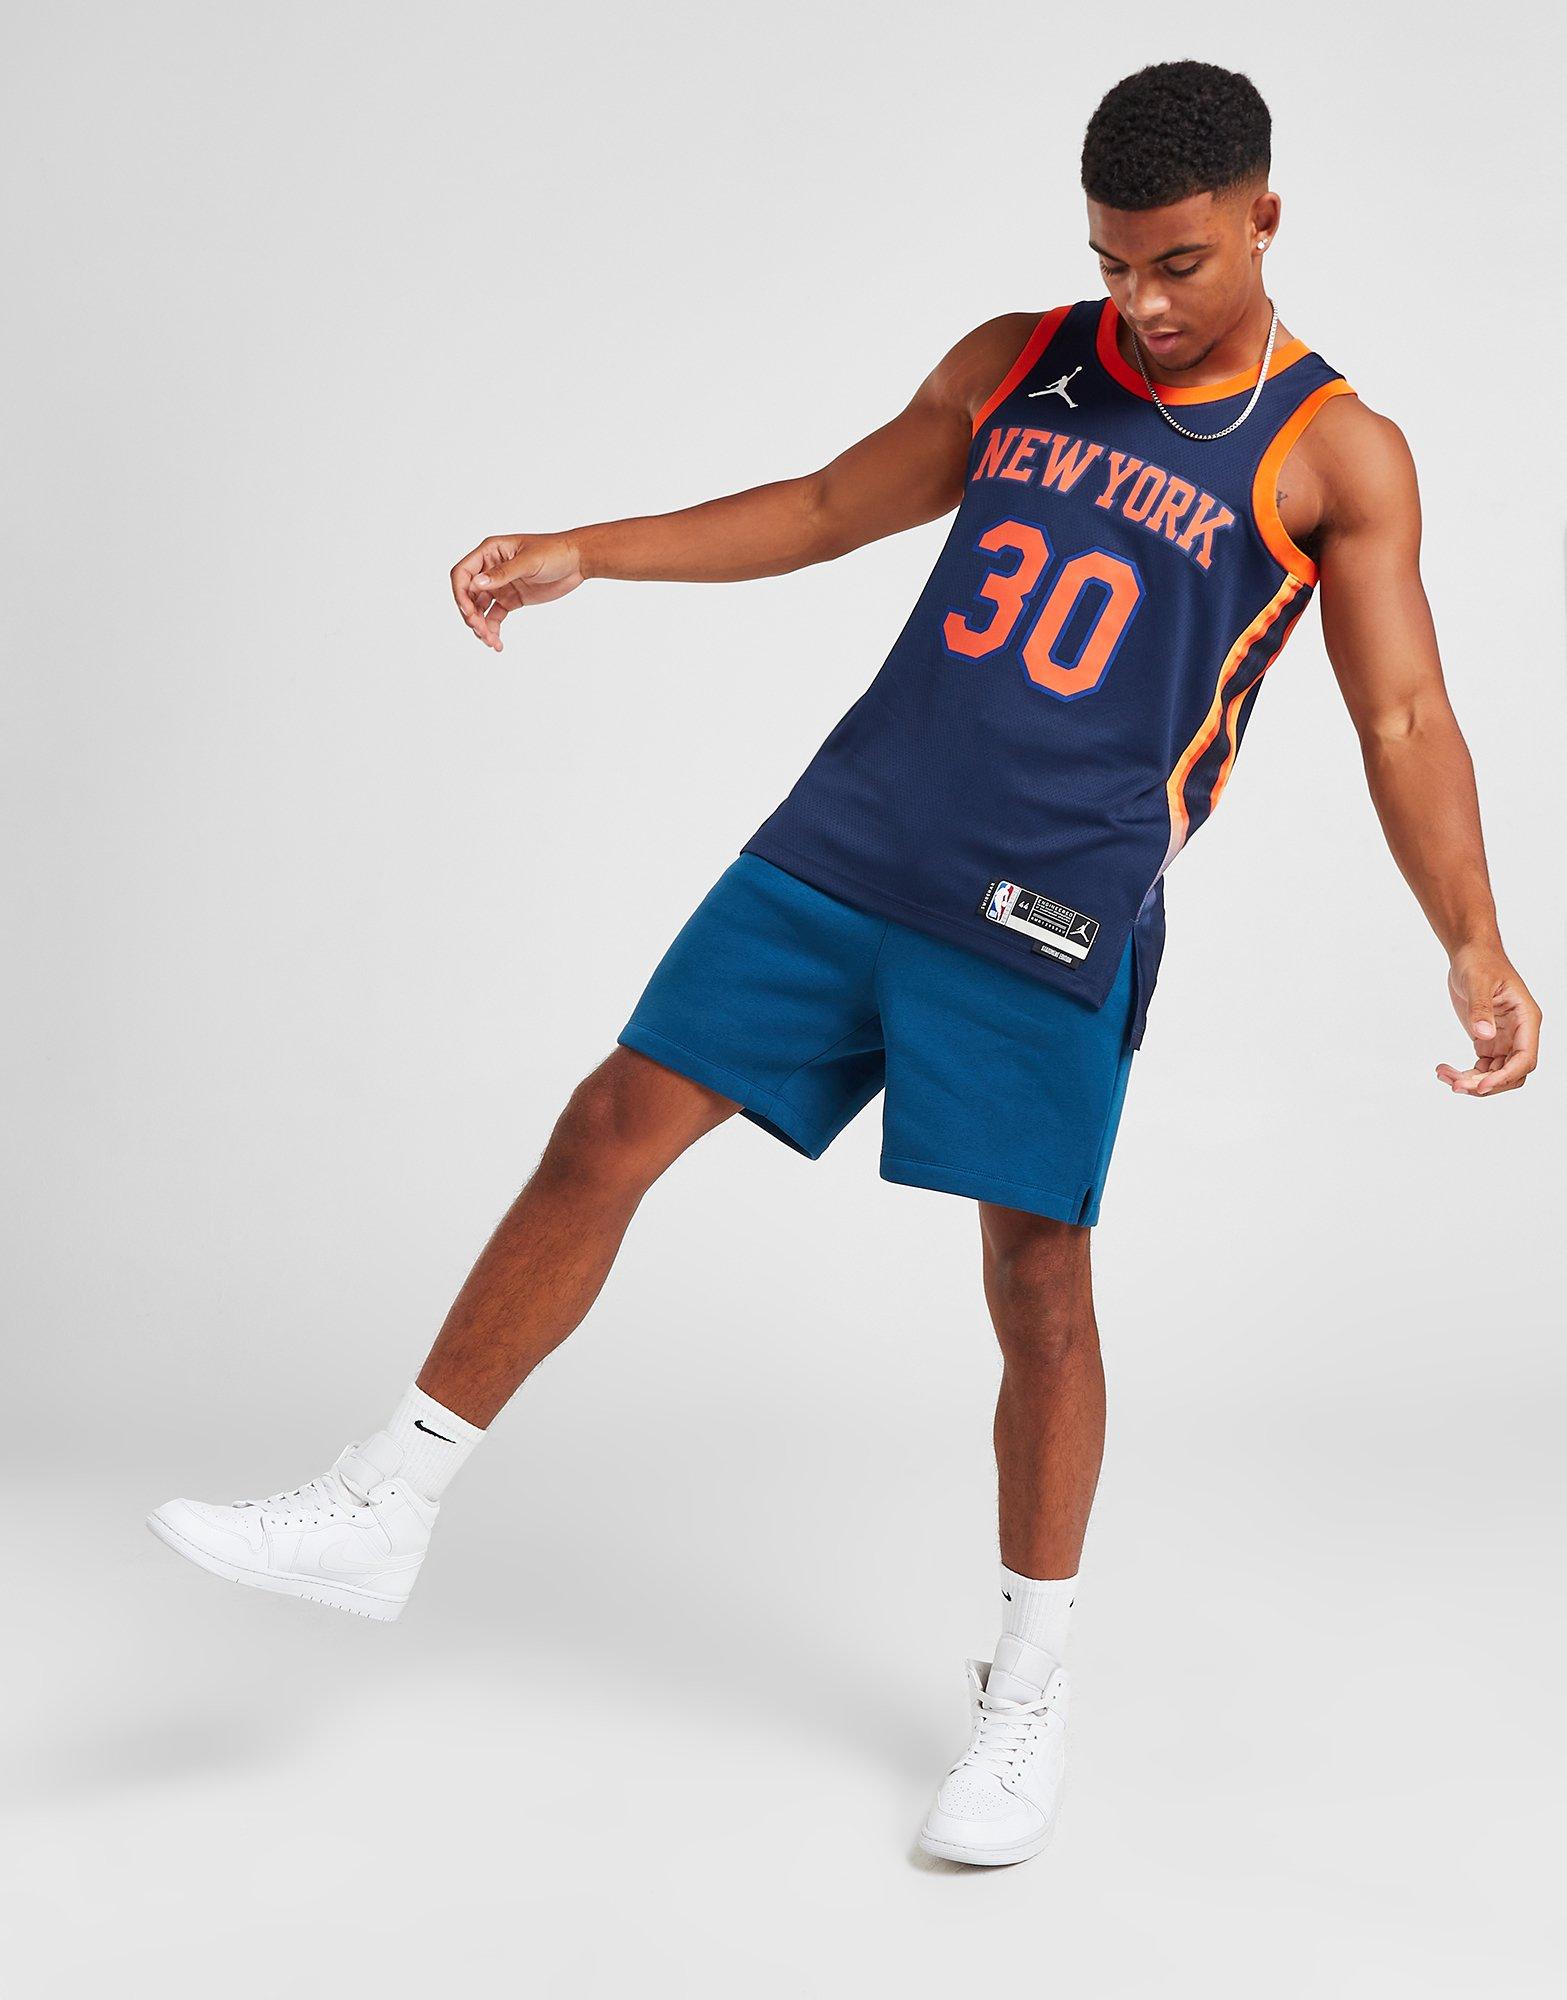 Blue Jordan NBA New York Knicks Randle #30 Swingman Jersey